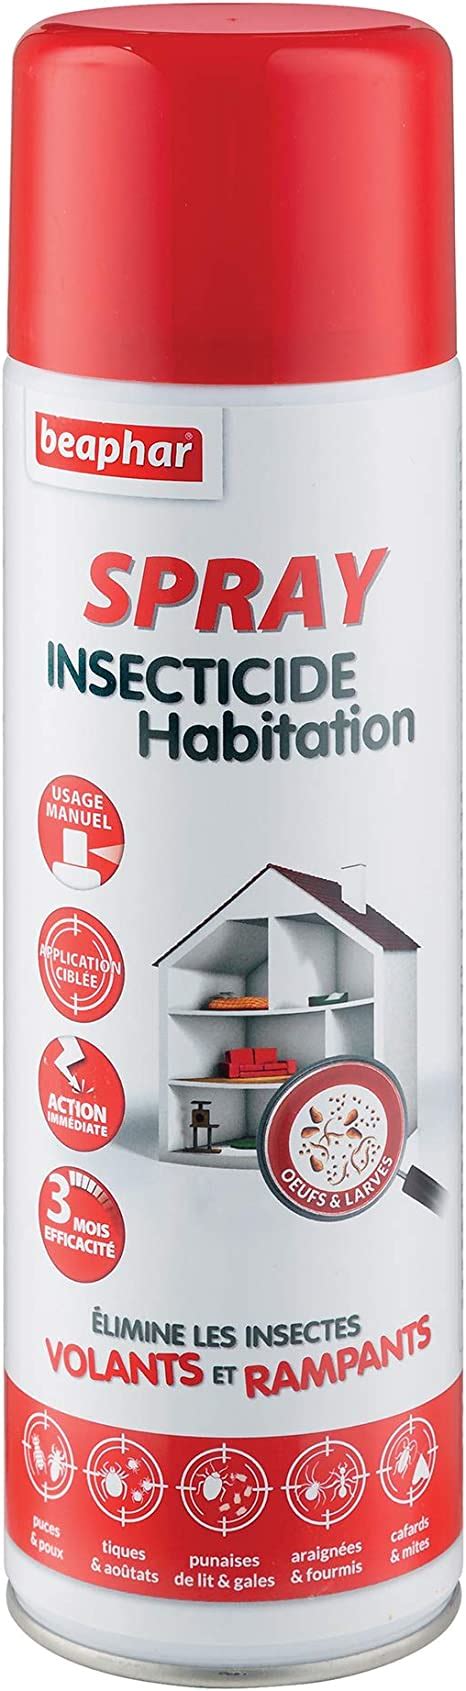 Beaphar â€“ Spray Insecticide Habitation â€“ Tue Les Insectes Volants